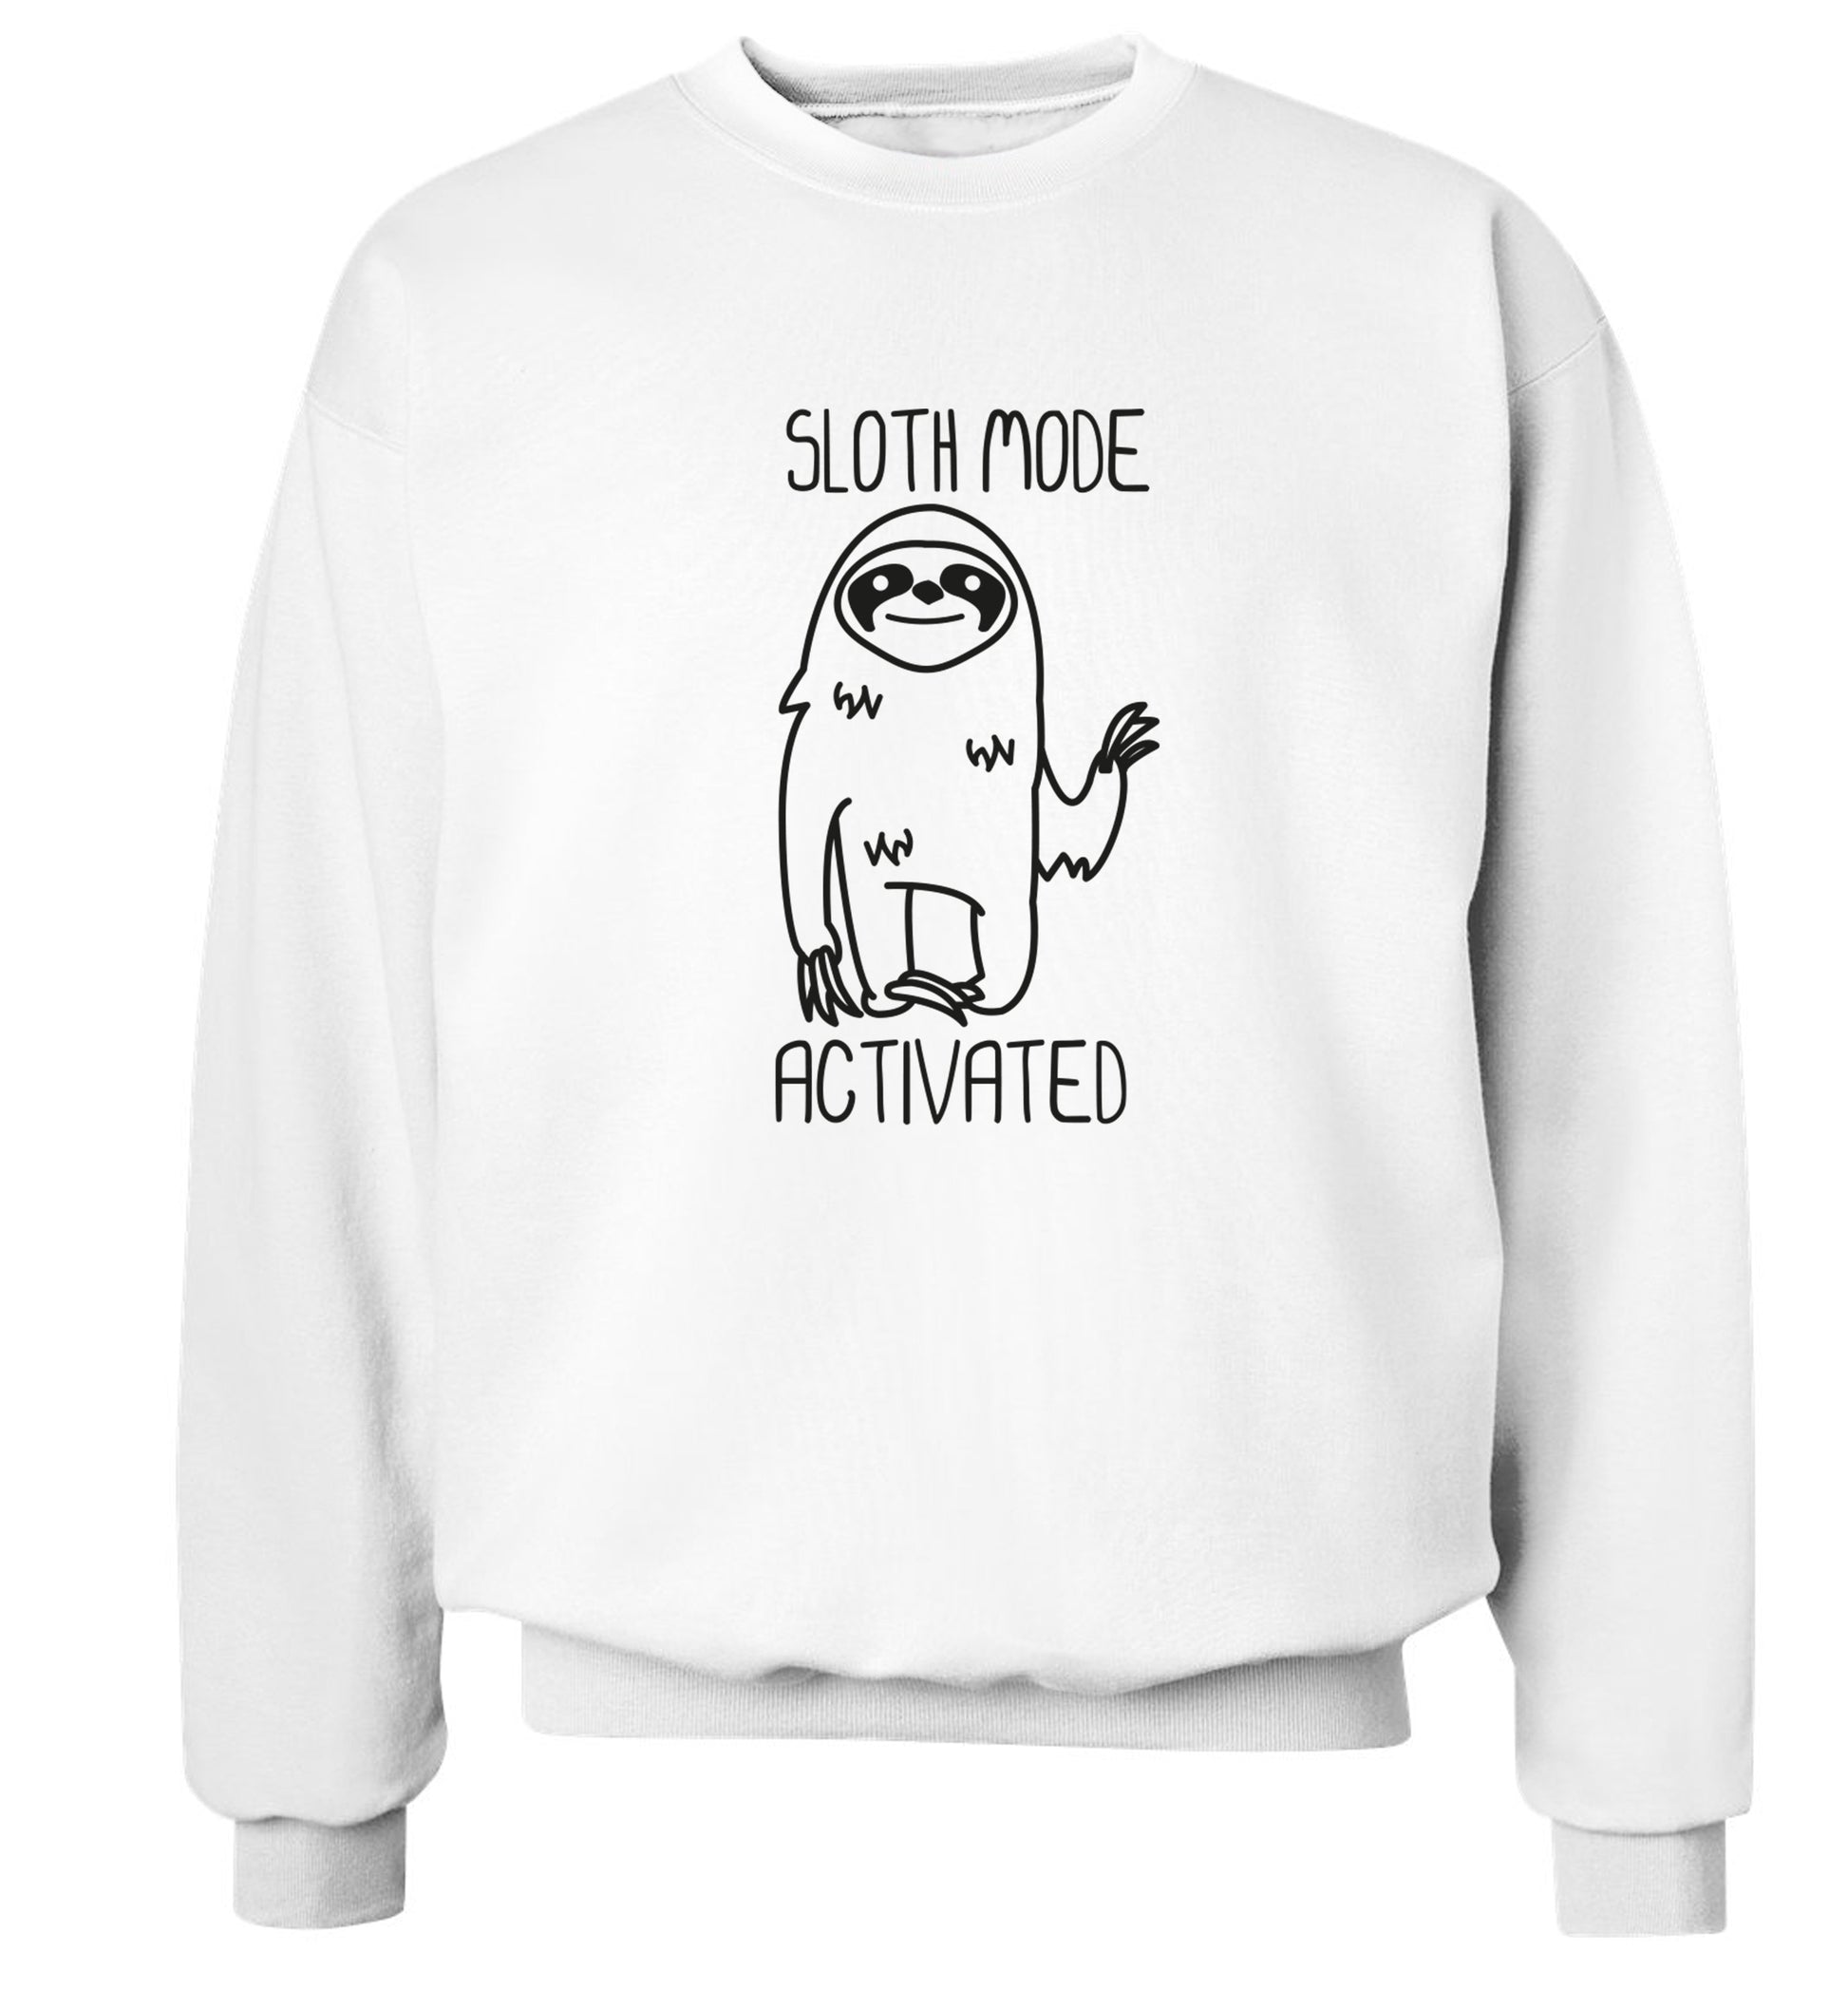 Sloth mode acitvated Adult's unisex white Sweater 2XL